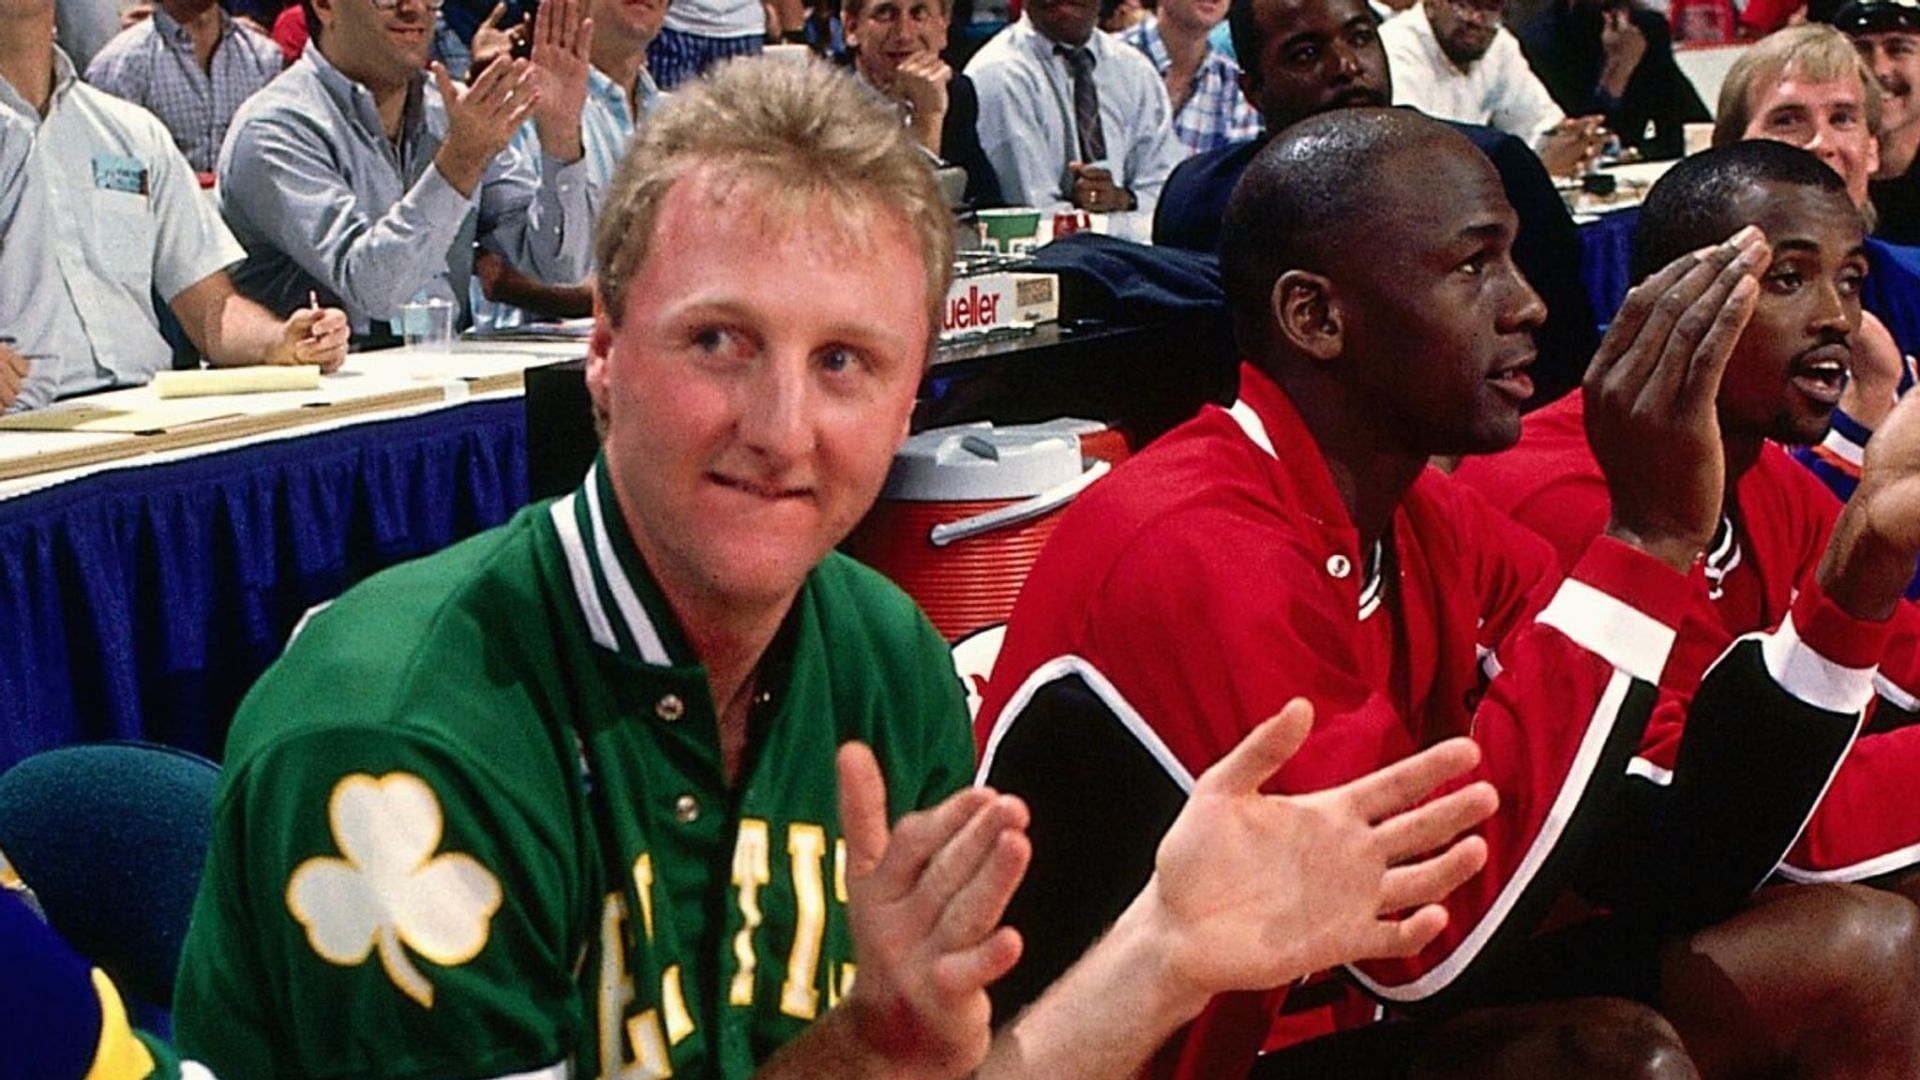 Michael Jordan sits alongside Larry Bird at the 1988 All-Star game (image credit: Sky Sports)